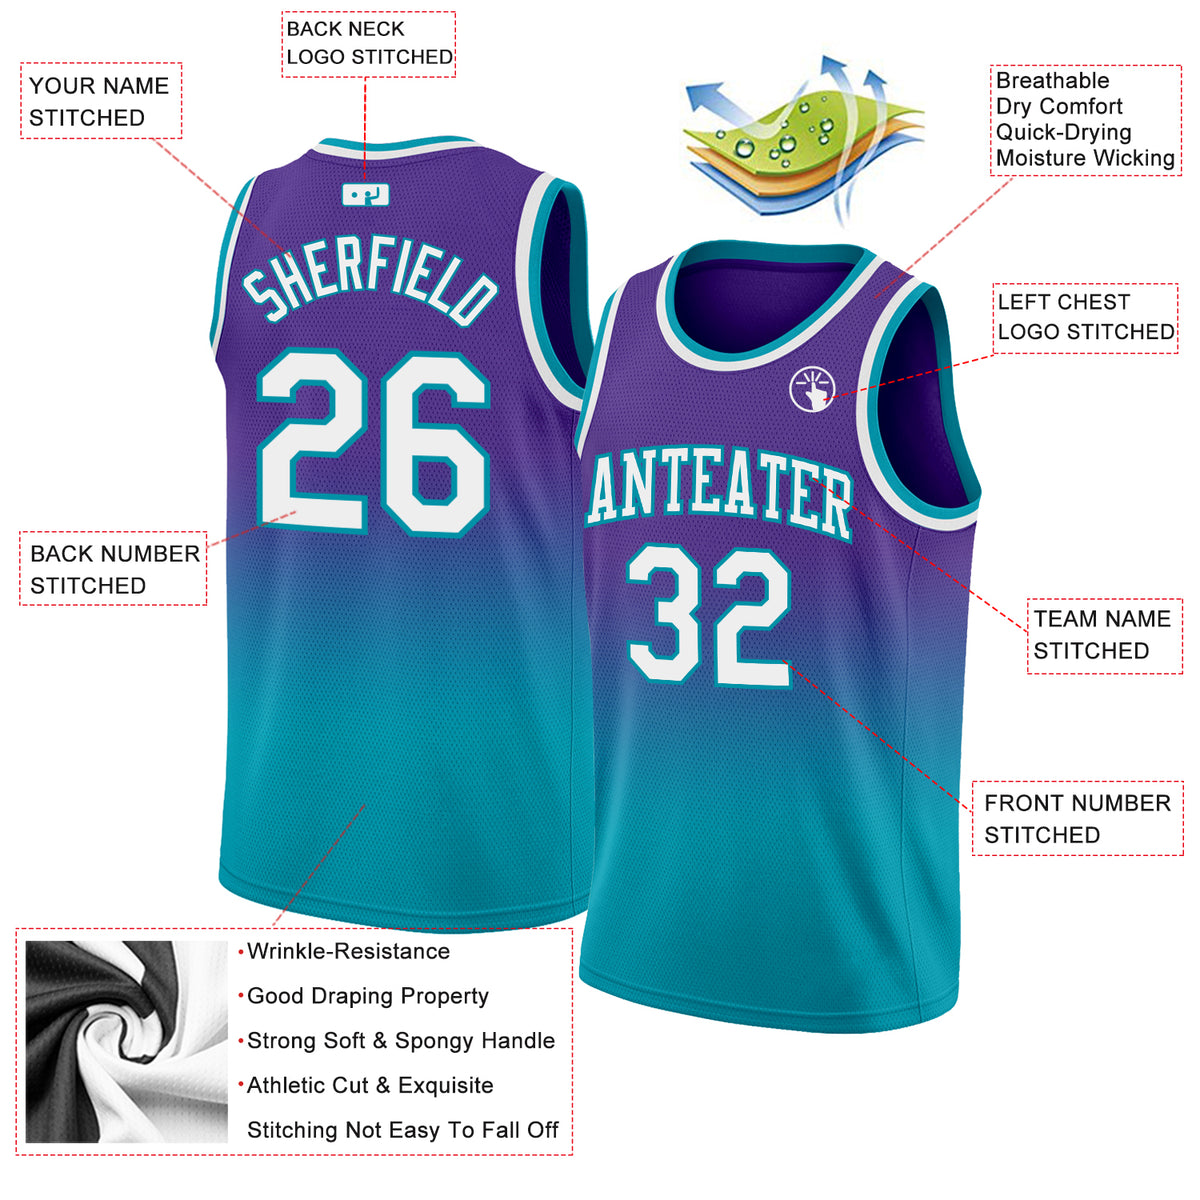 Charlotte Hornets Purples Basketball Jersey Design Sportswear